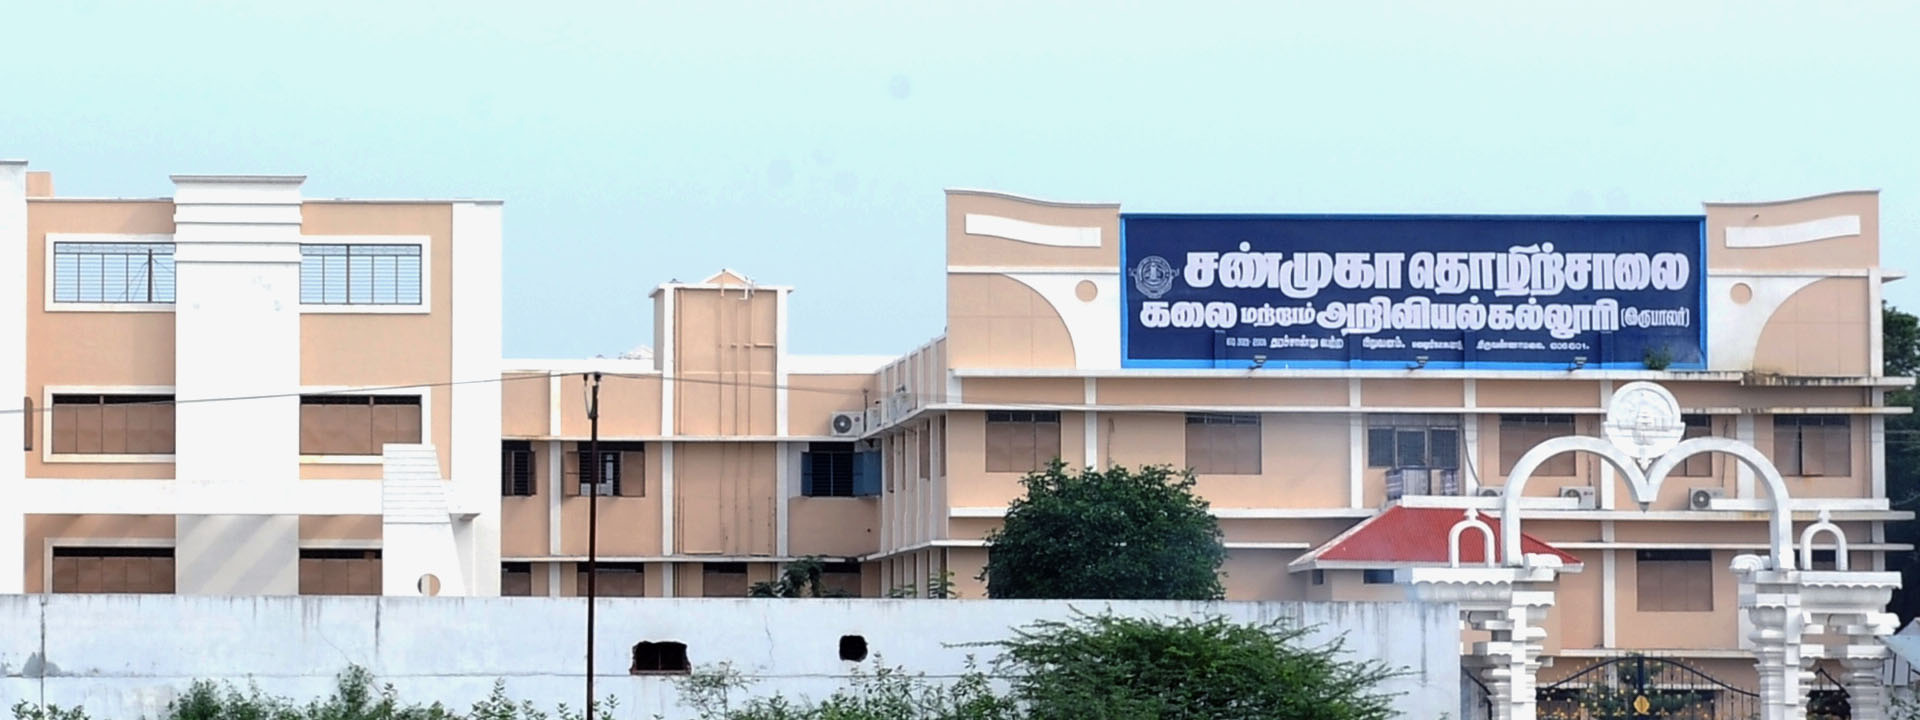 Shanmuga Industries Arts and Science College, Tiruvannamalai Image